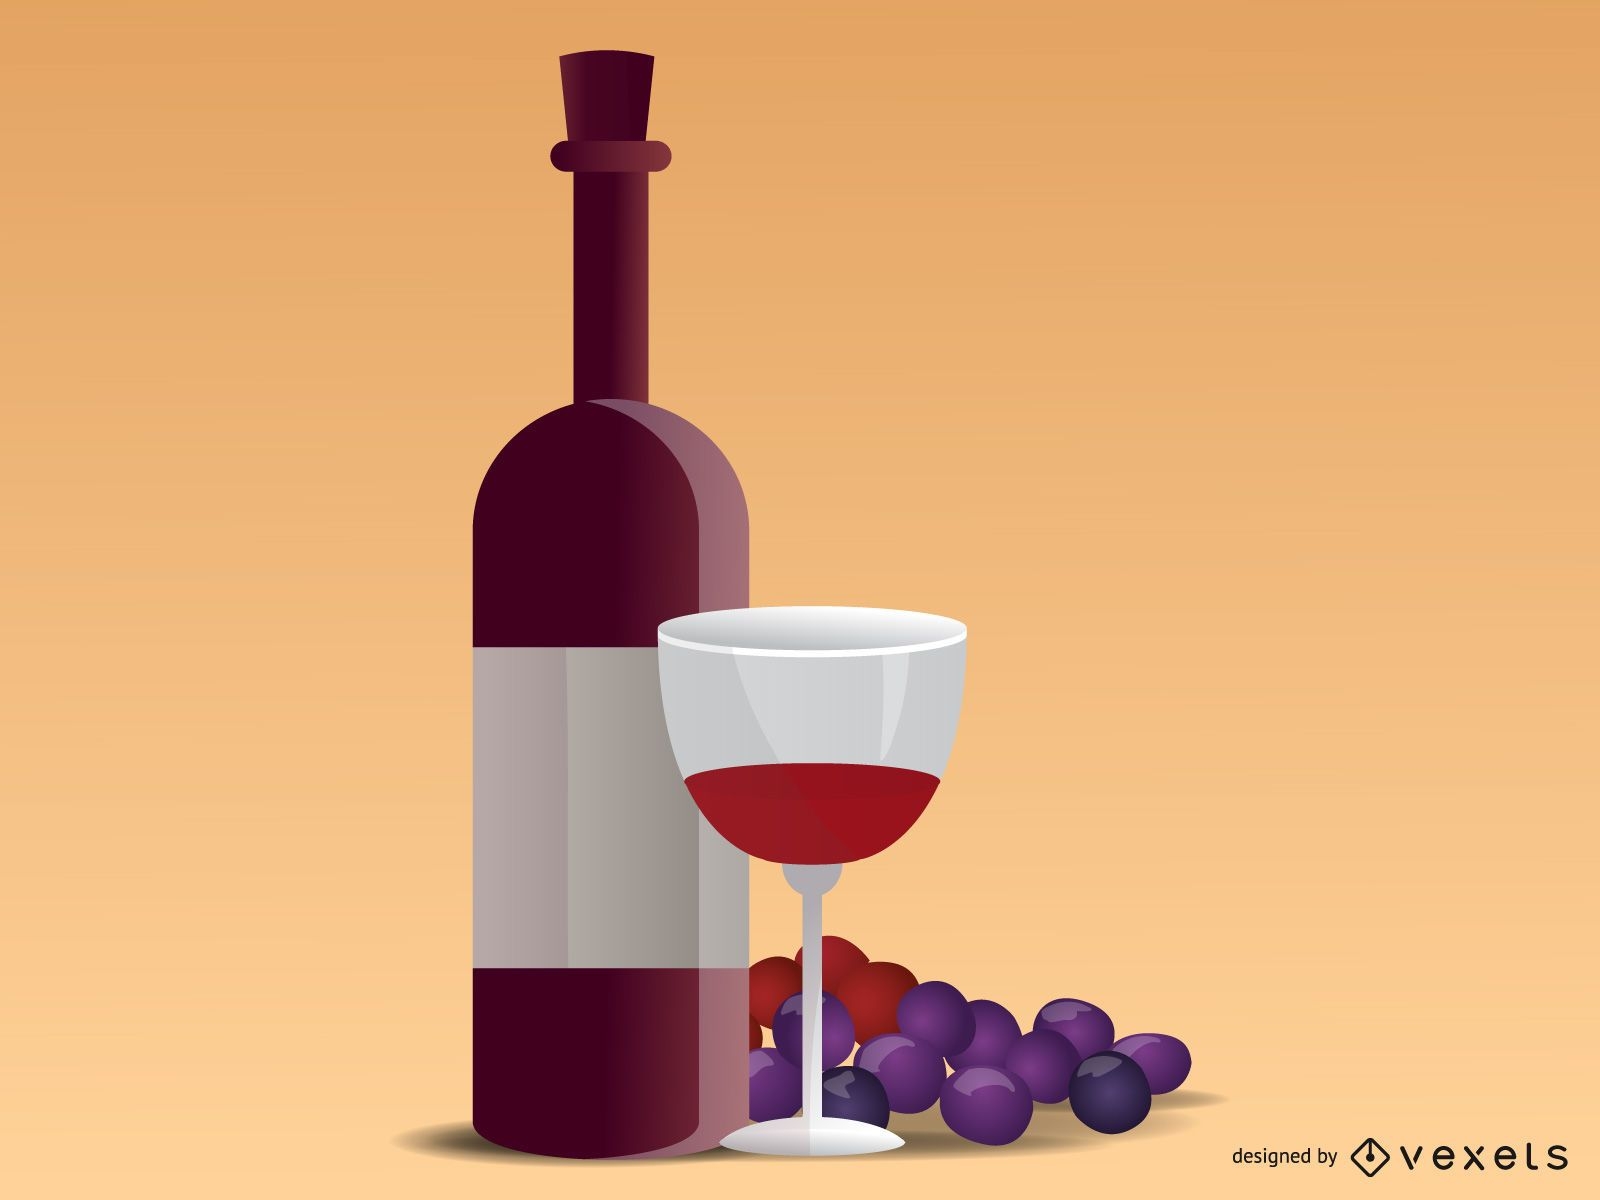 Ilustraci?n realista de uvas y vino.